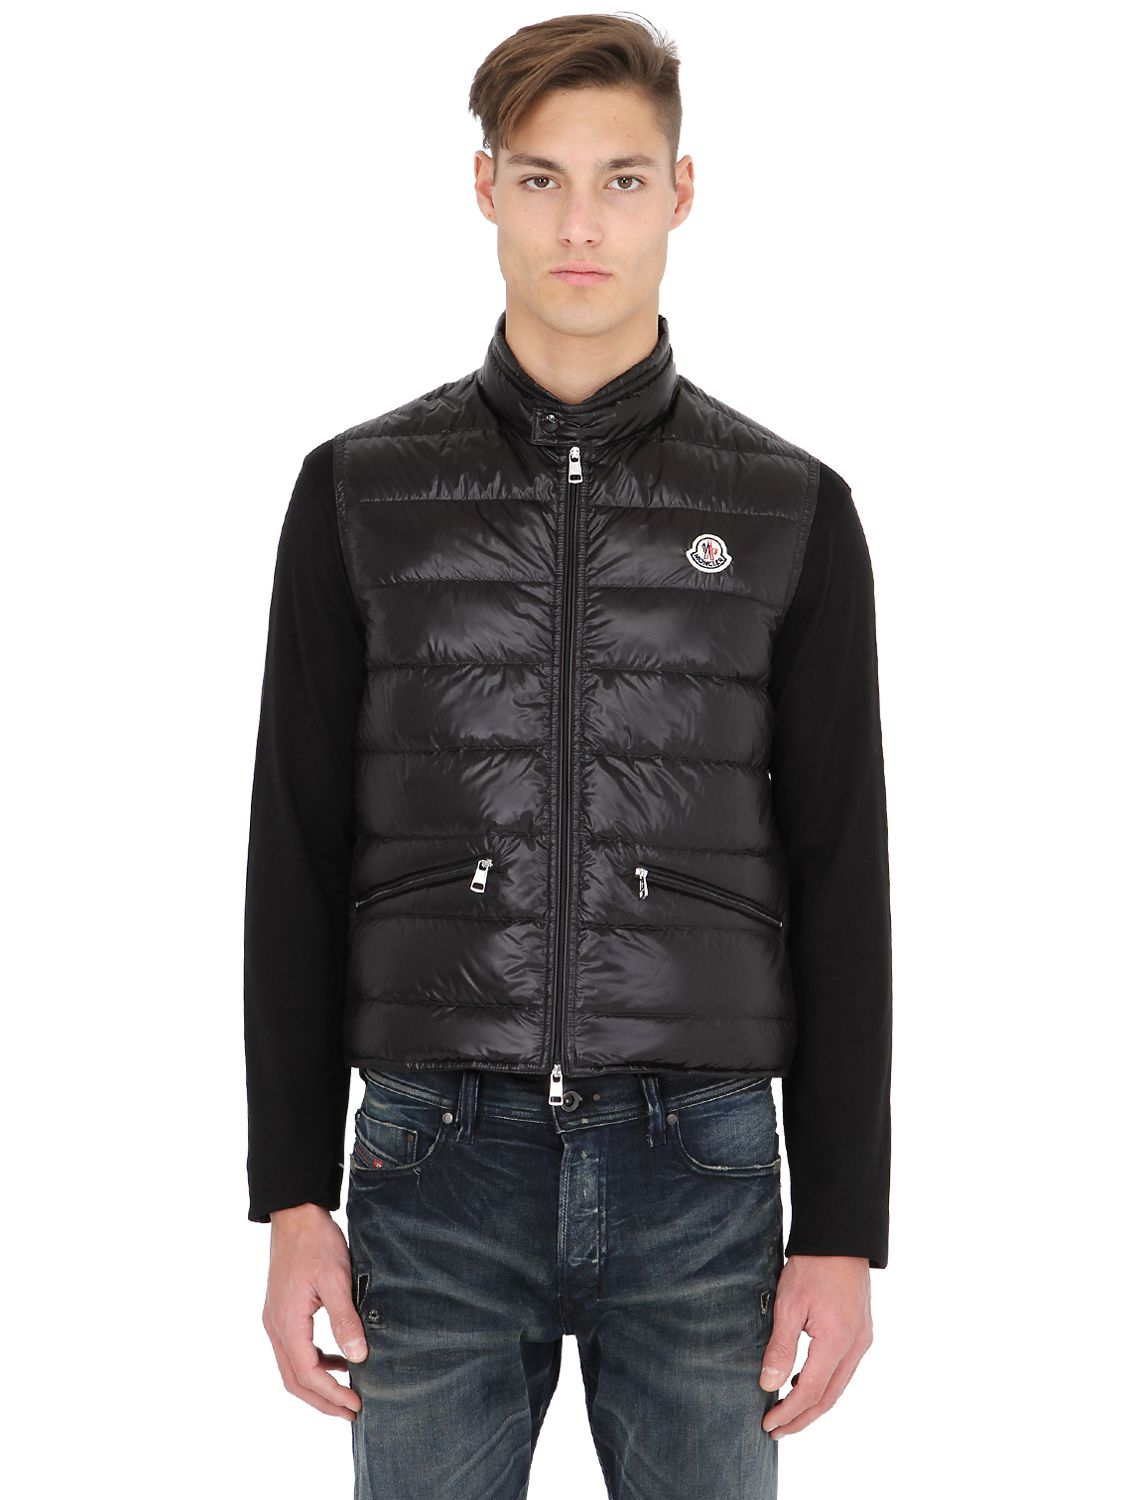 Moncler Knitted Sleeve Jacket in Black for Men - Lyst